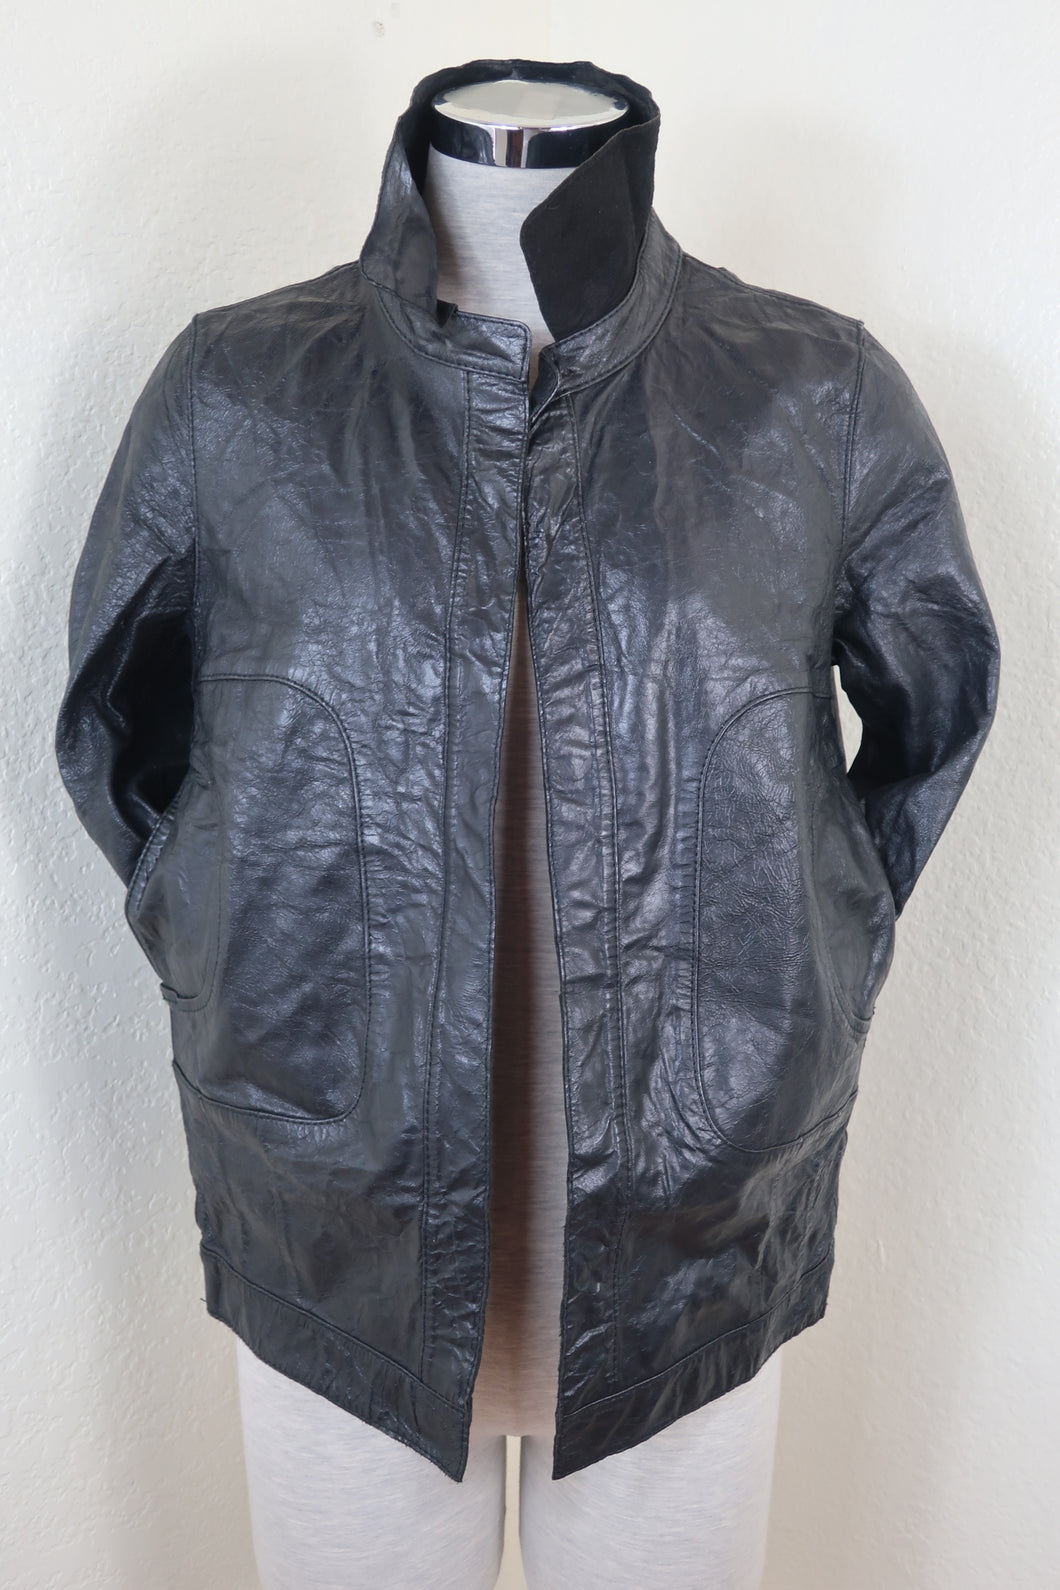 MARNI Black Lambskin Leather Jacket 38 4 5 6 S mall Medium